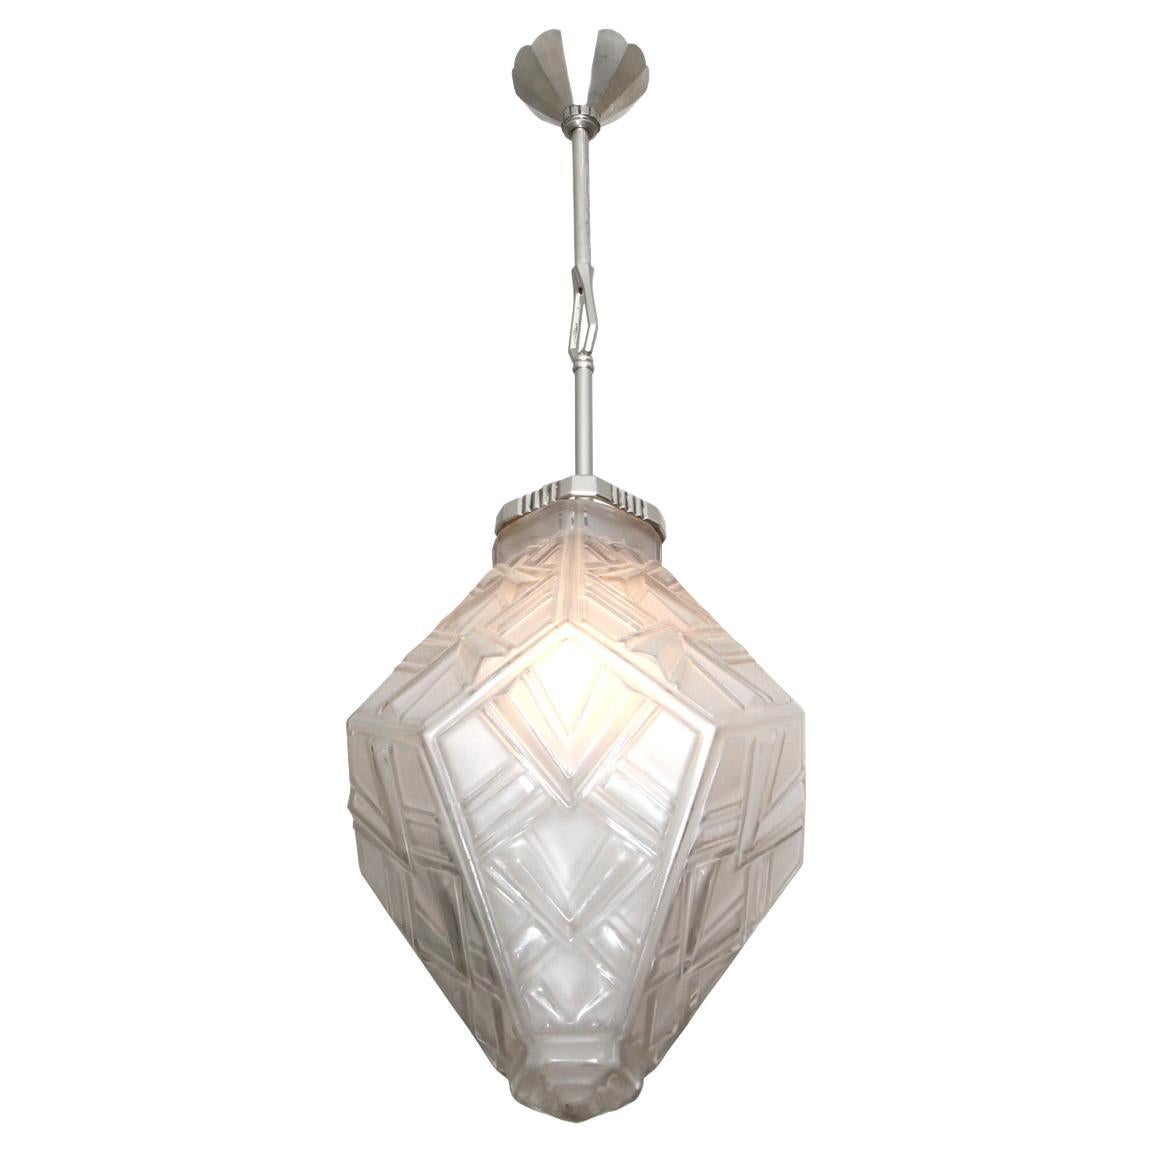 French Art Deco lantern chandelier  by Genet & Michon 